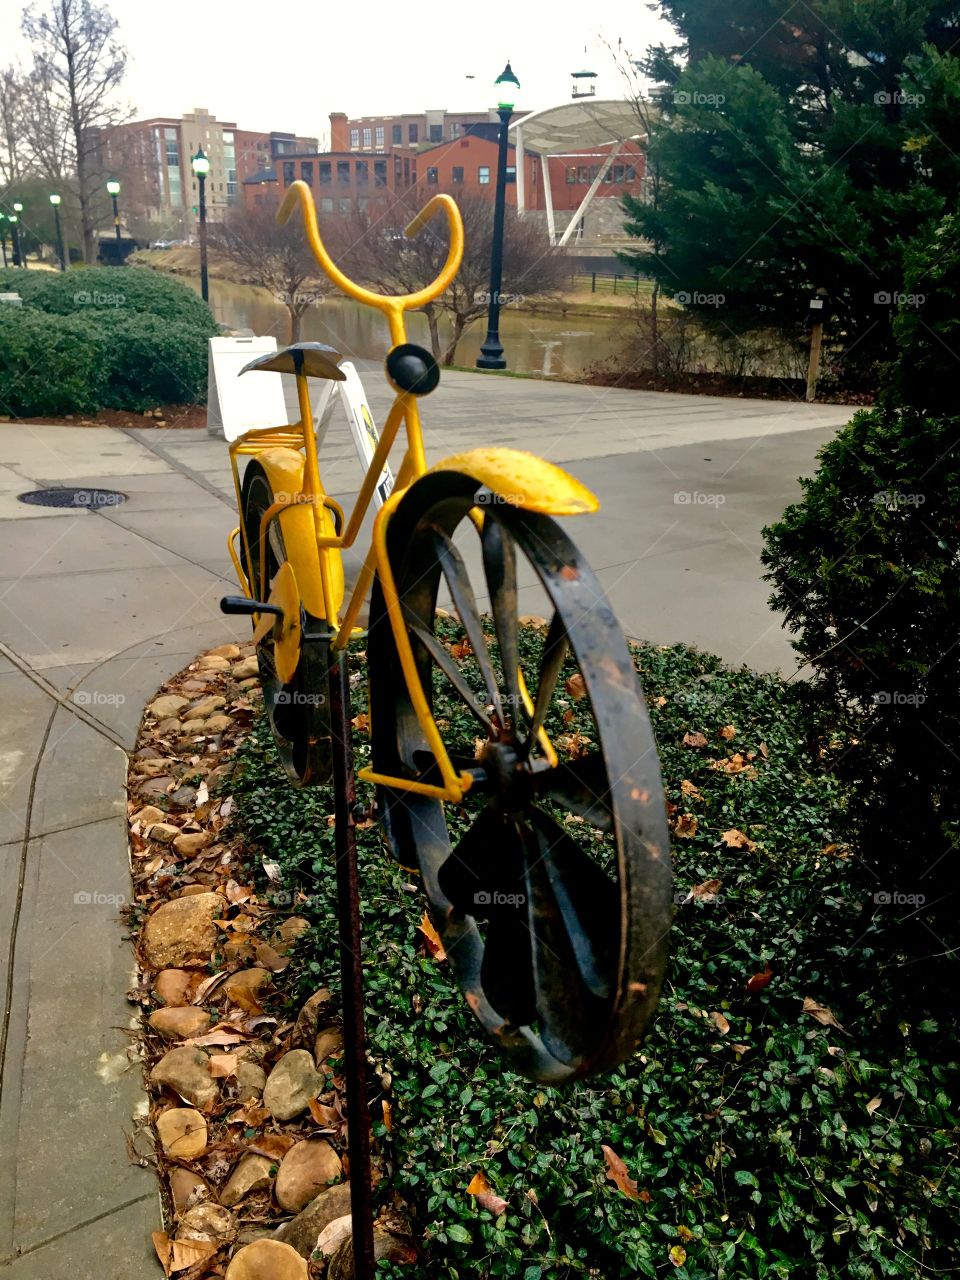 Yellow bike decoration 